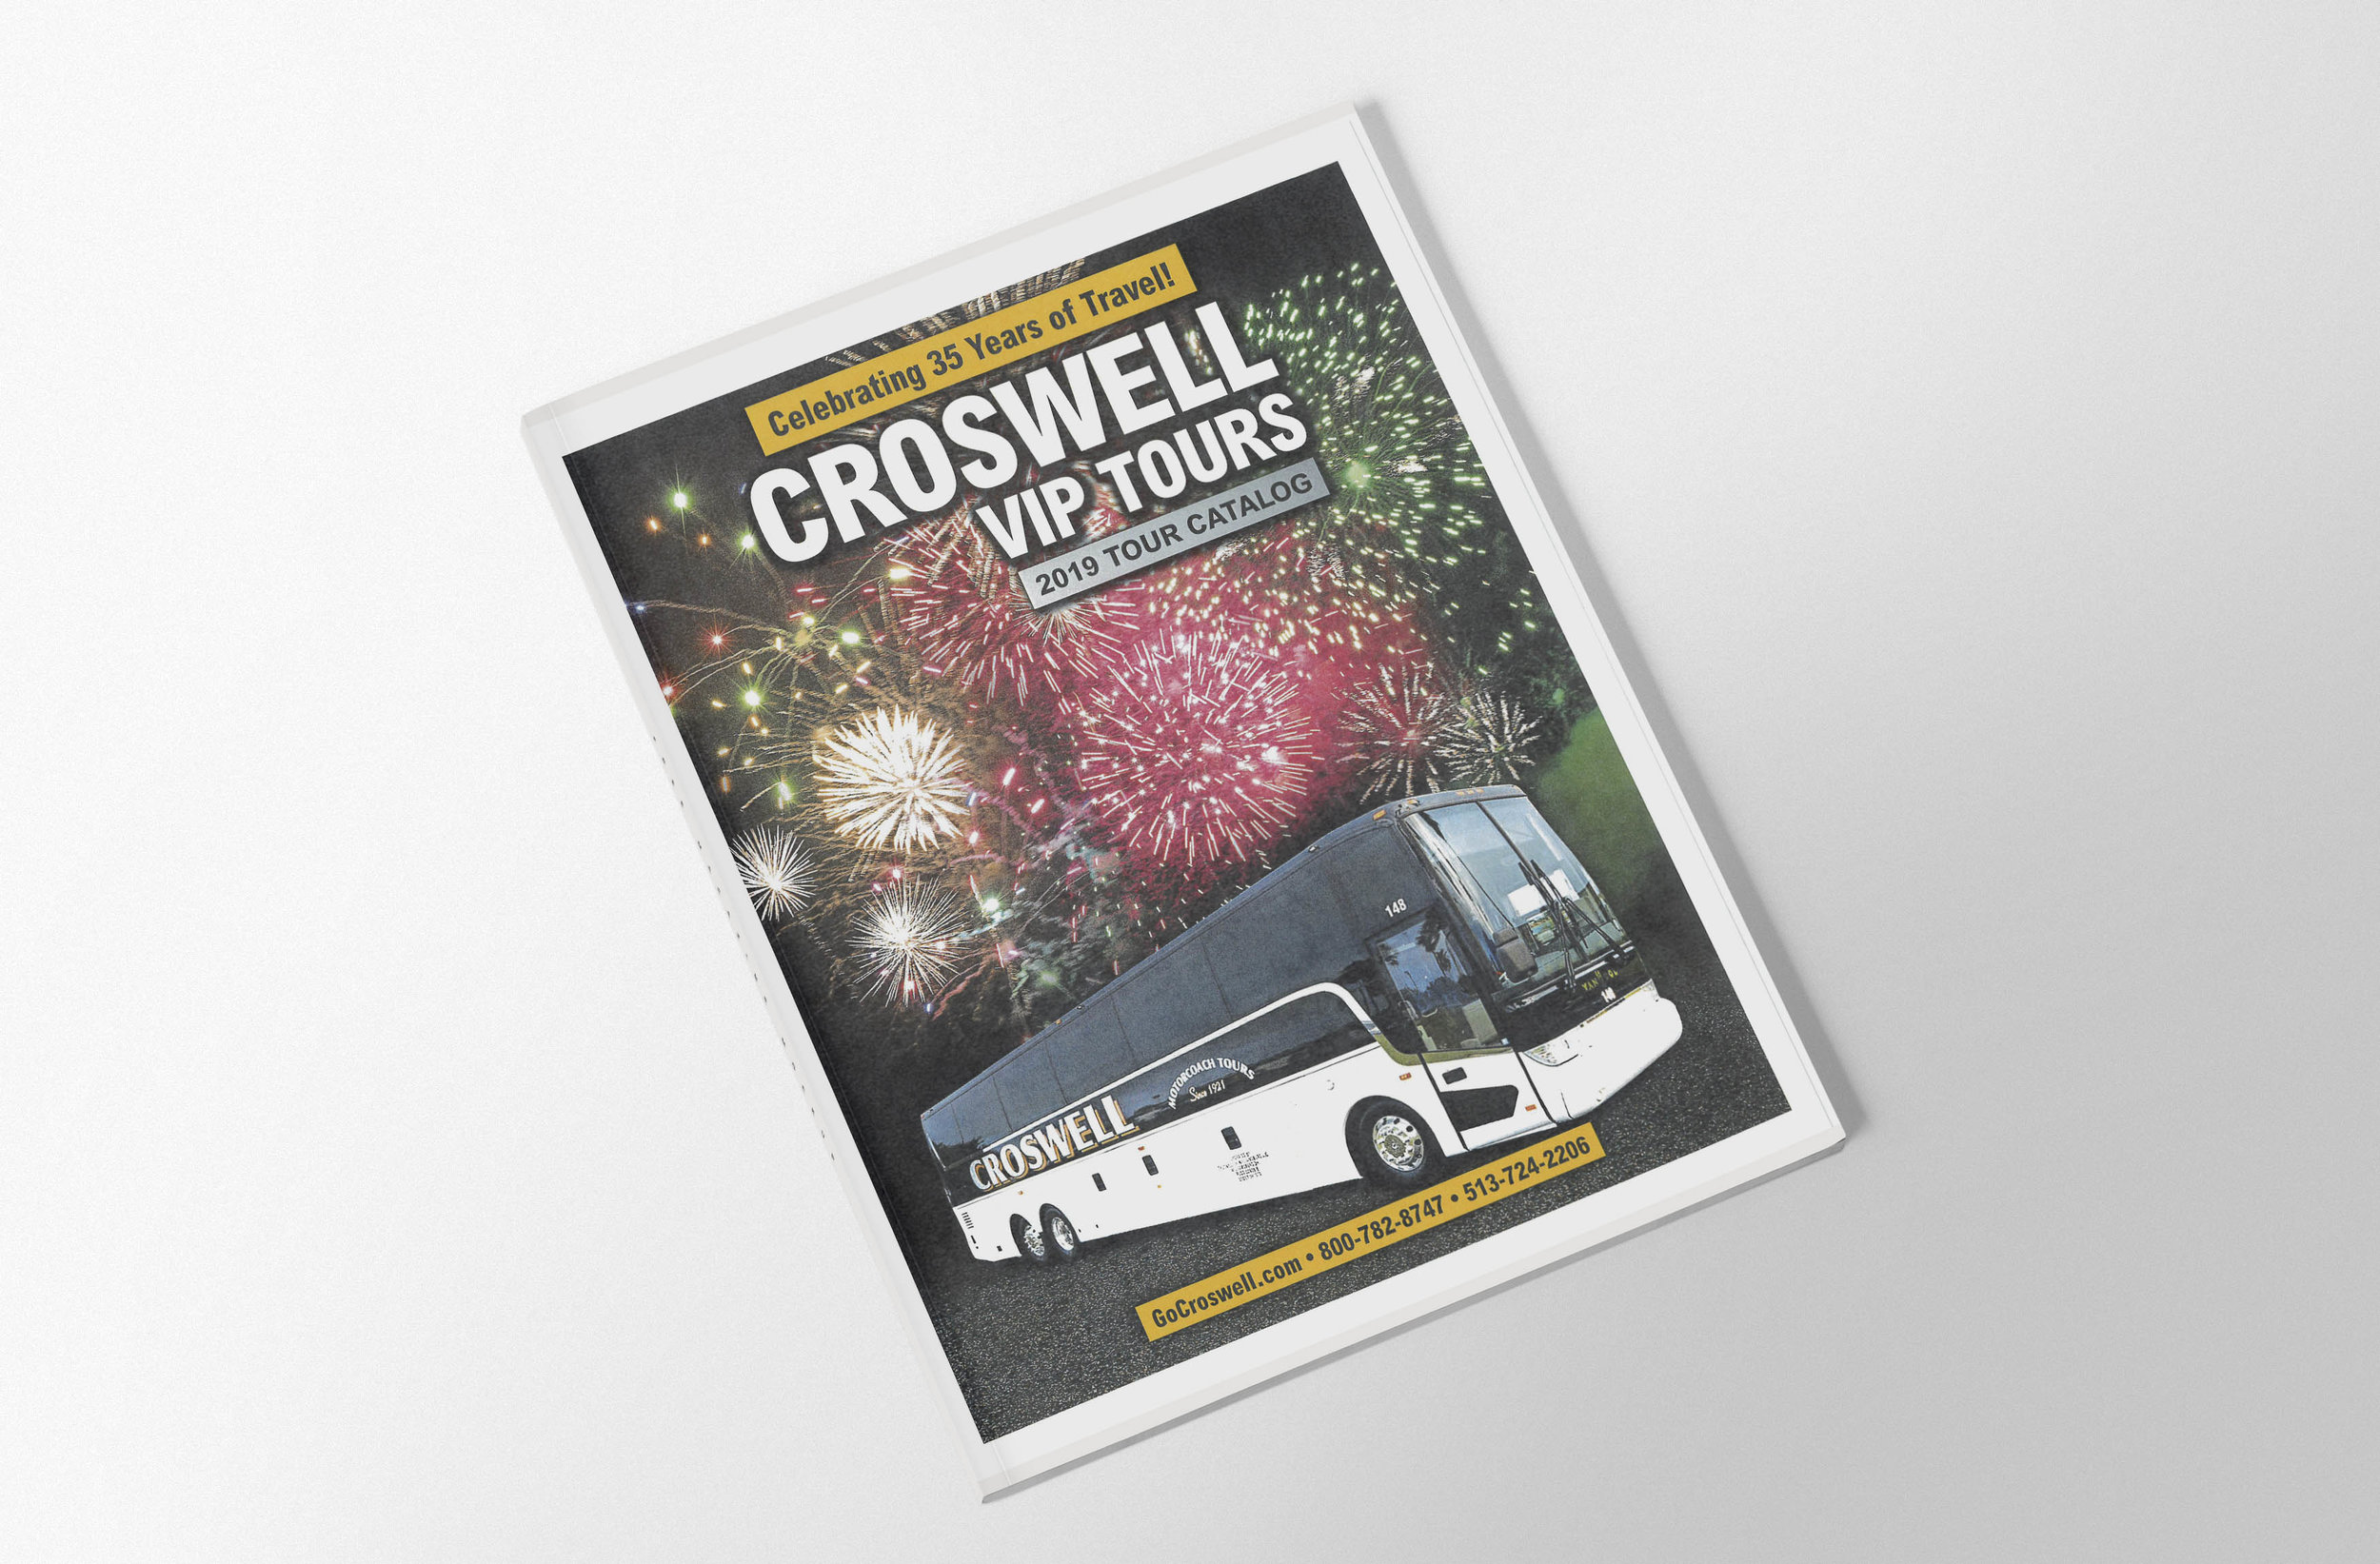 croswell vip tours